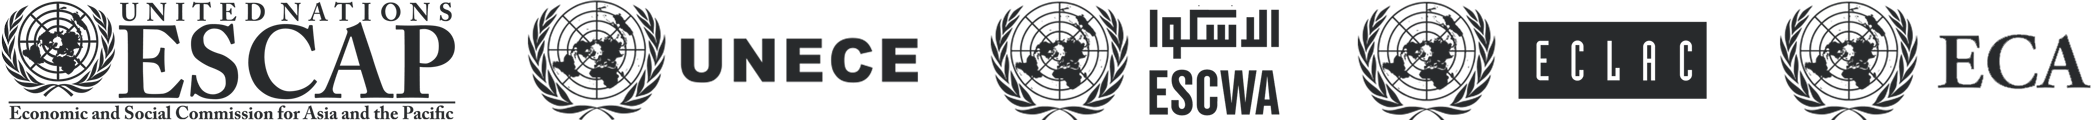 UN Regional Commissions